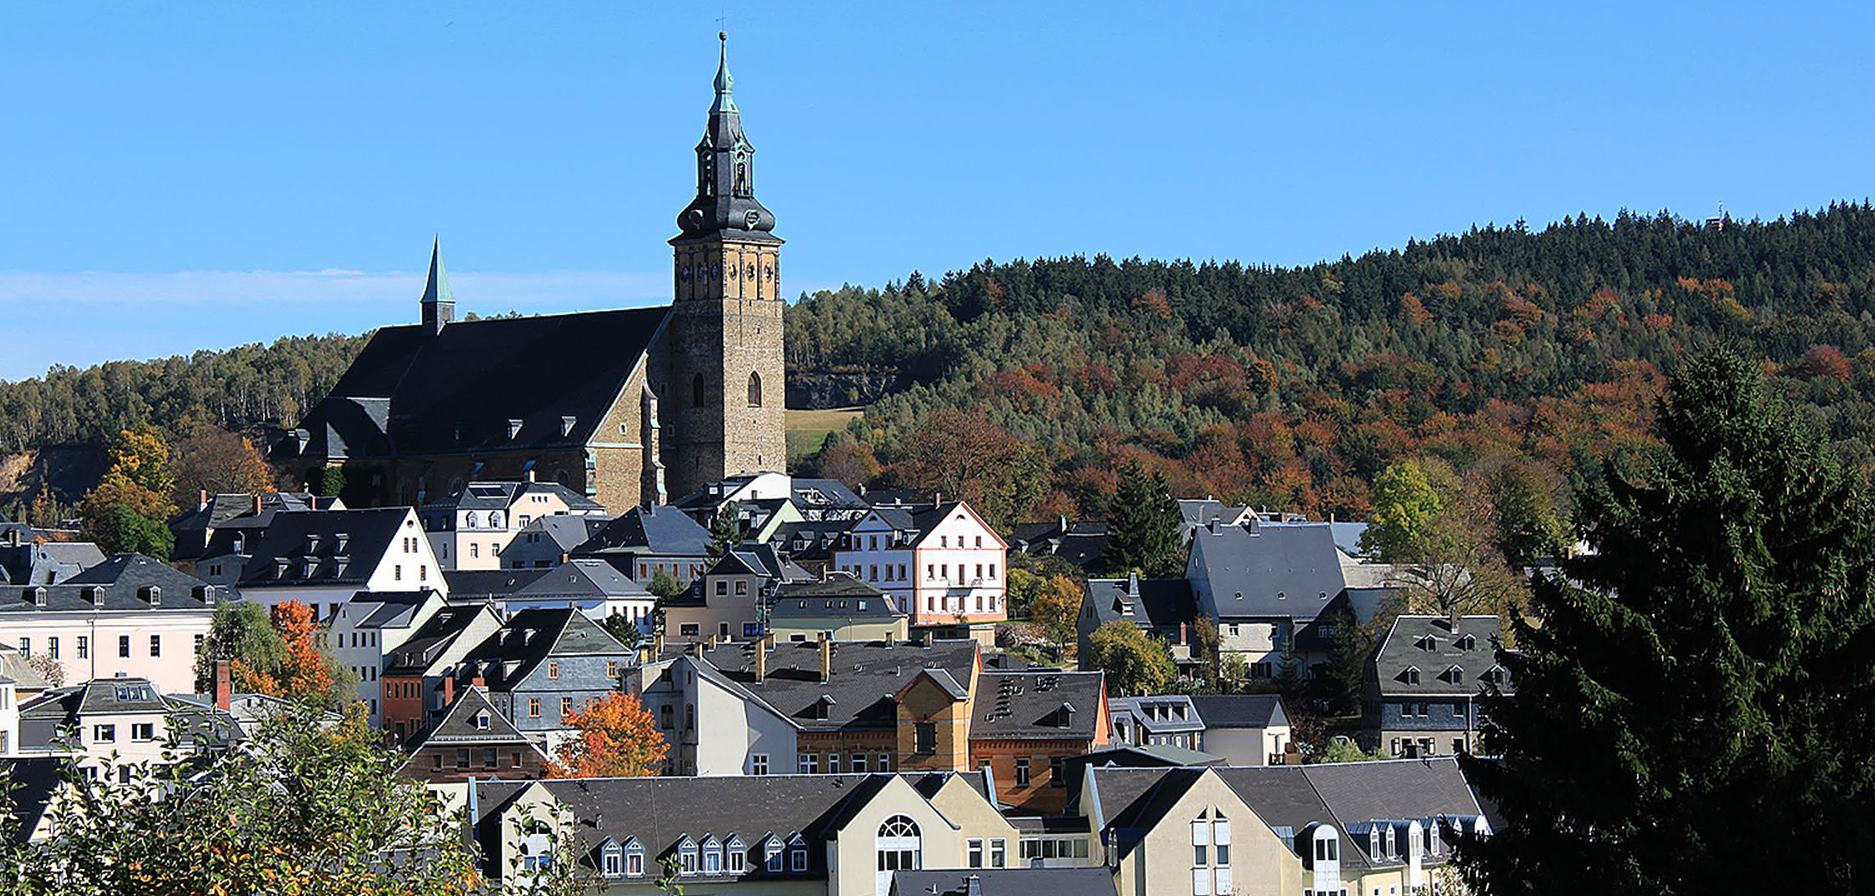 Schneeberg (Miebner/wikimedia)